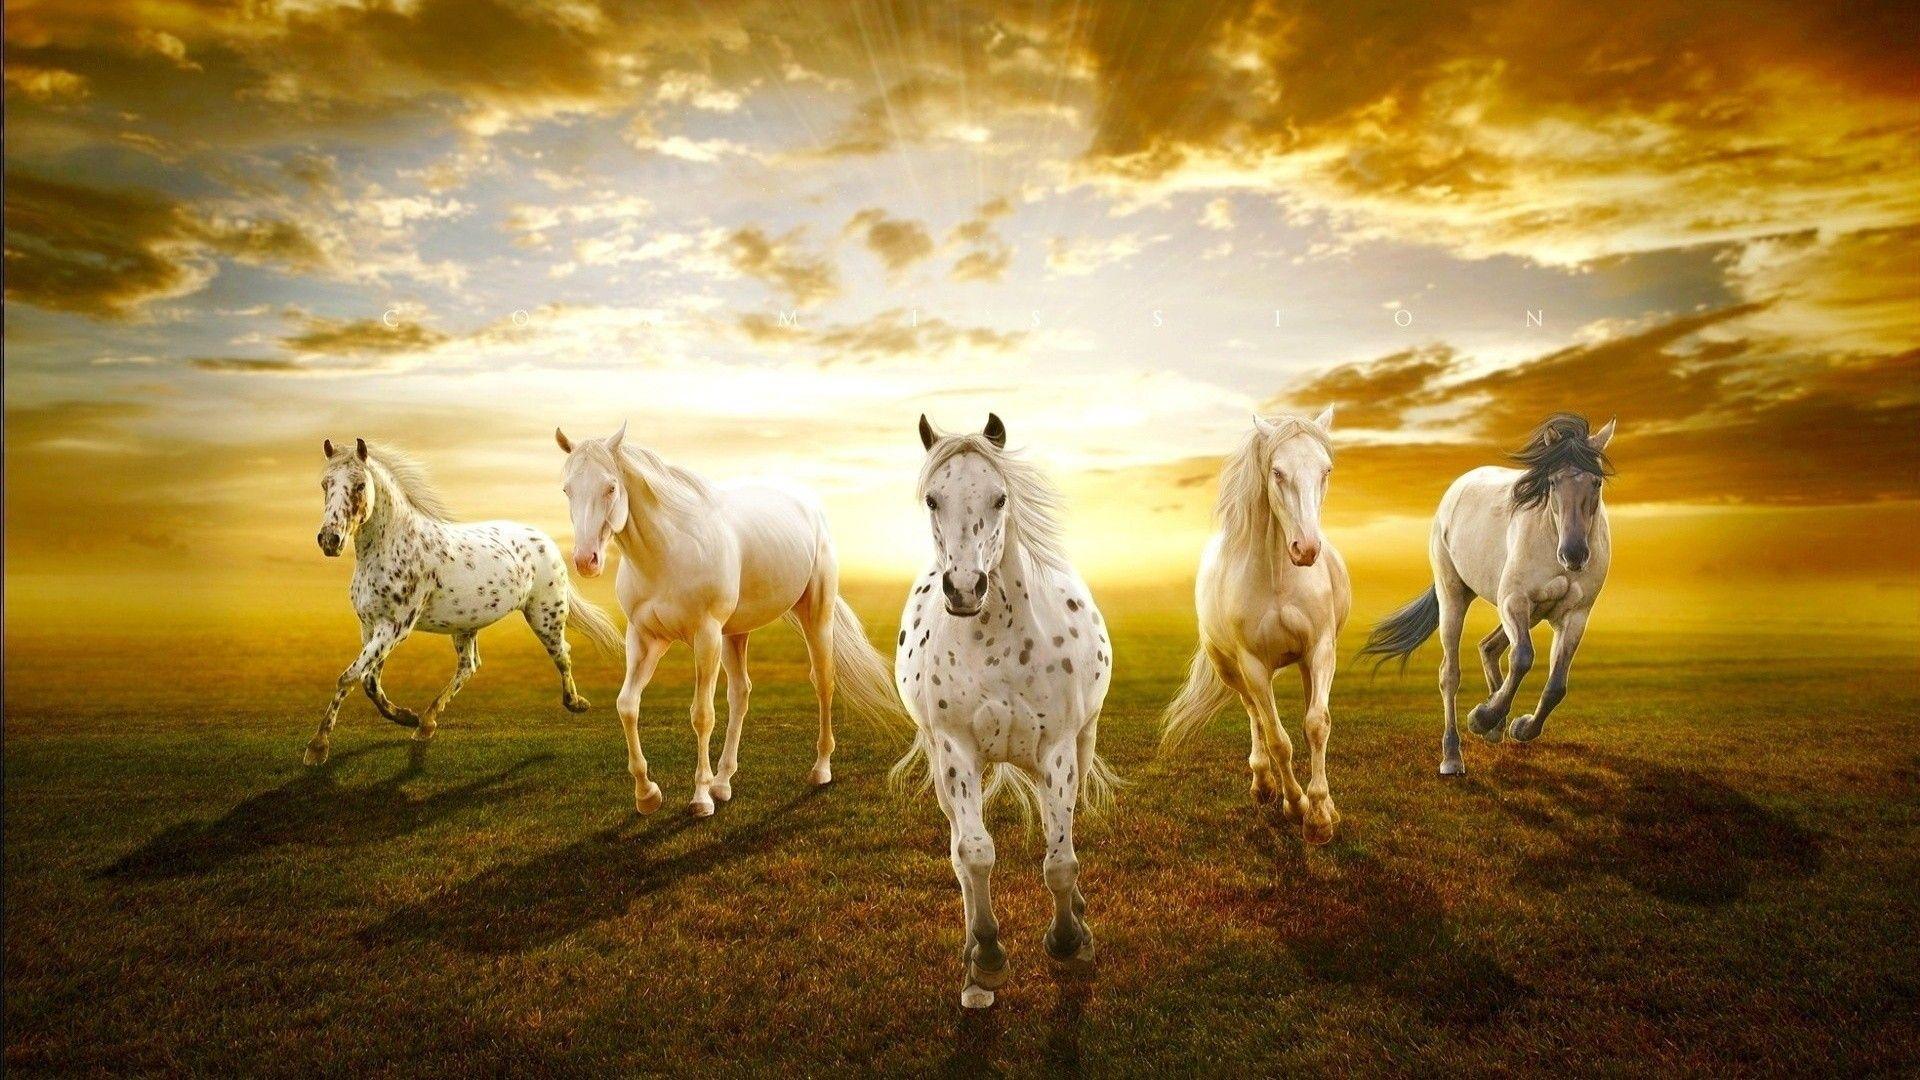 7 Horse Wallpaper Hd For Mobile -HD Wallpaper | Horse wallpaper, 7 horses  running painting vastu wallpaper, Horses